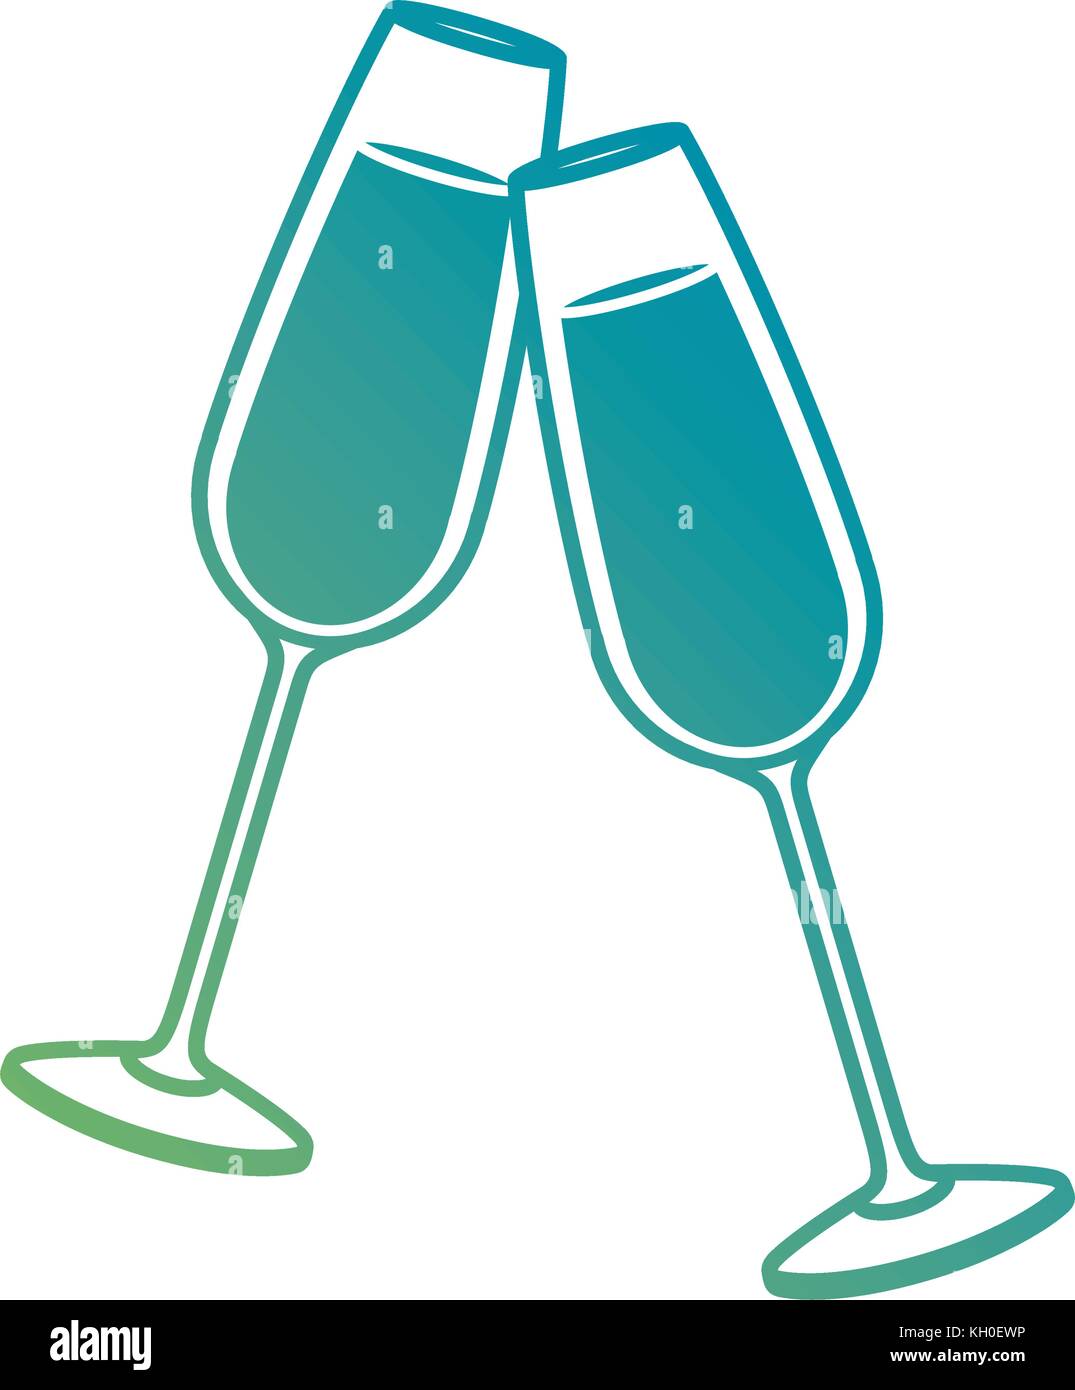 [Image: pair-of-champagne-glass-cheers-drink-cel...KH0EWP.jpg]